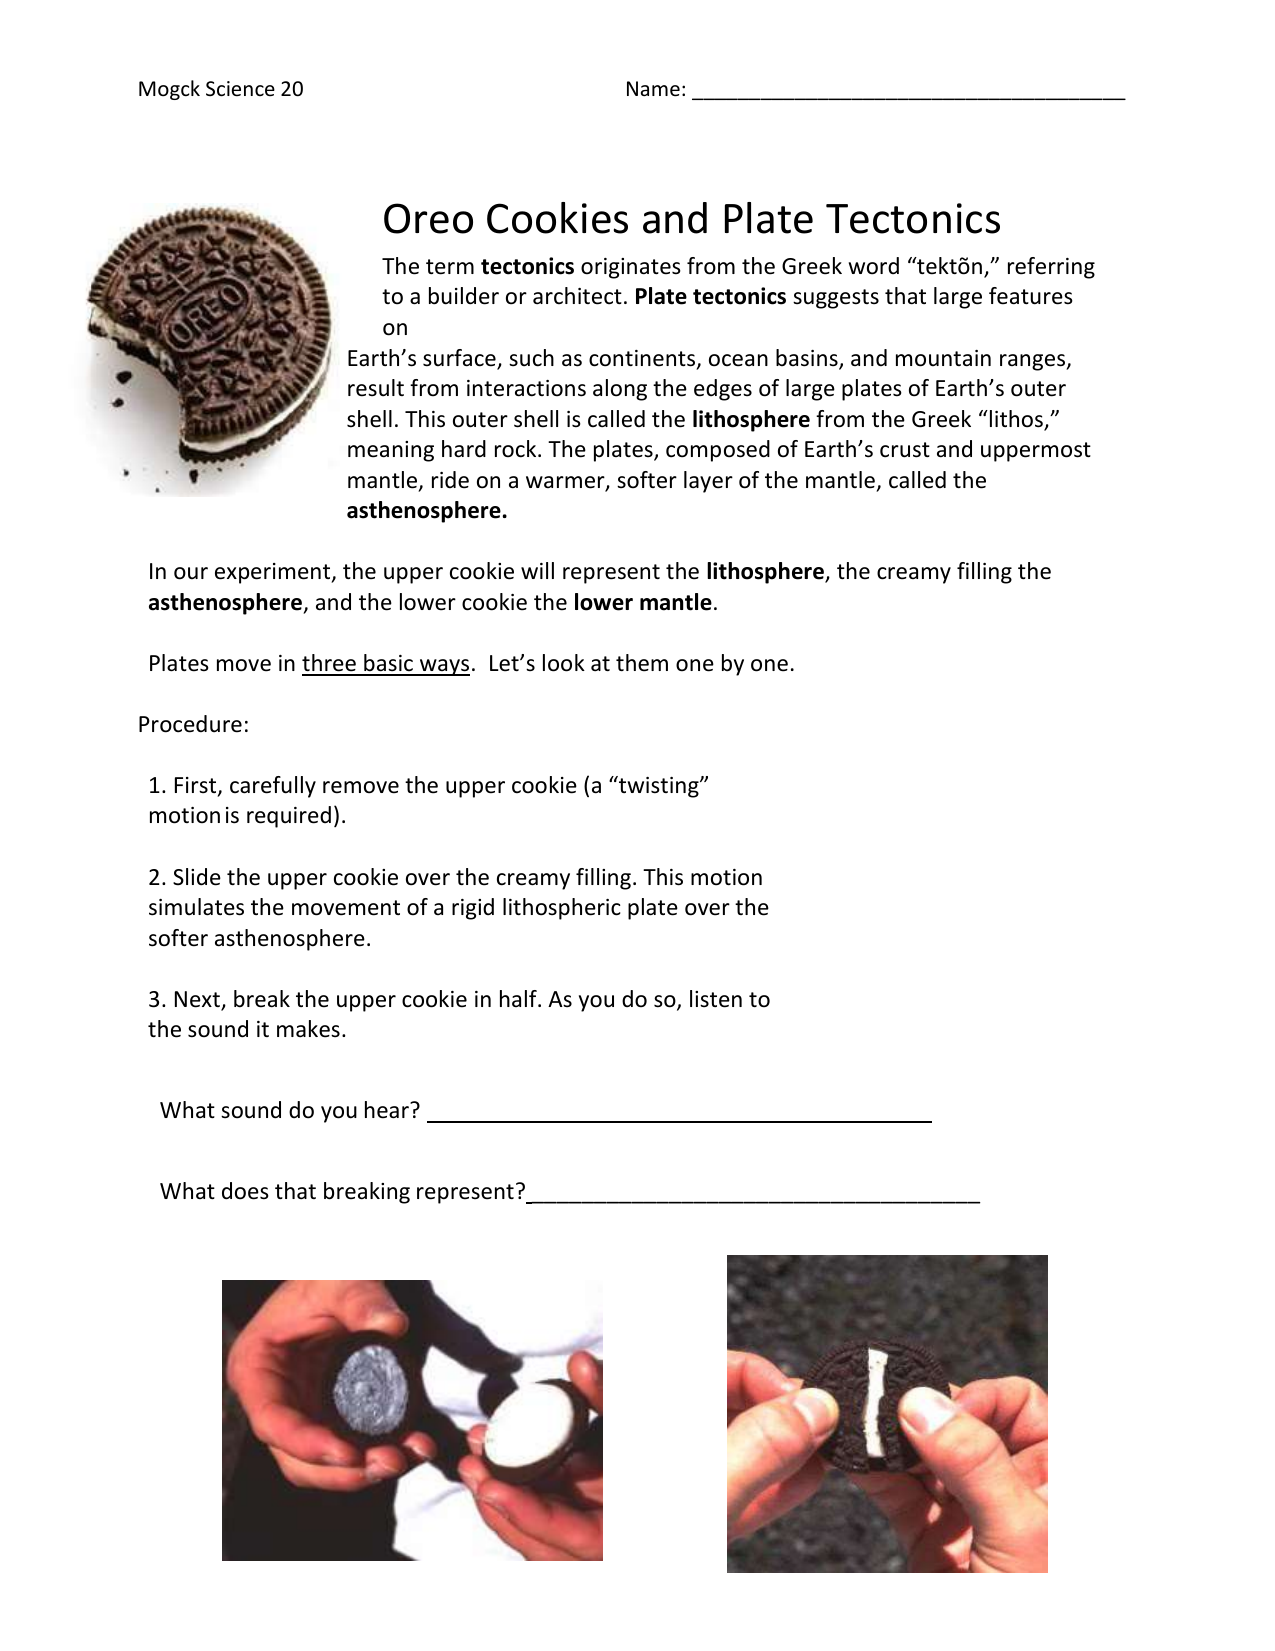 Oreo Cookies And Plate Tectonics Worksheet Answer Key